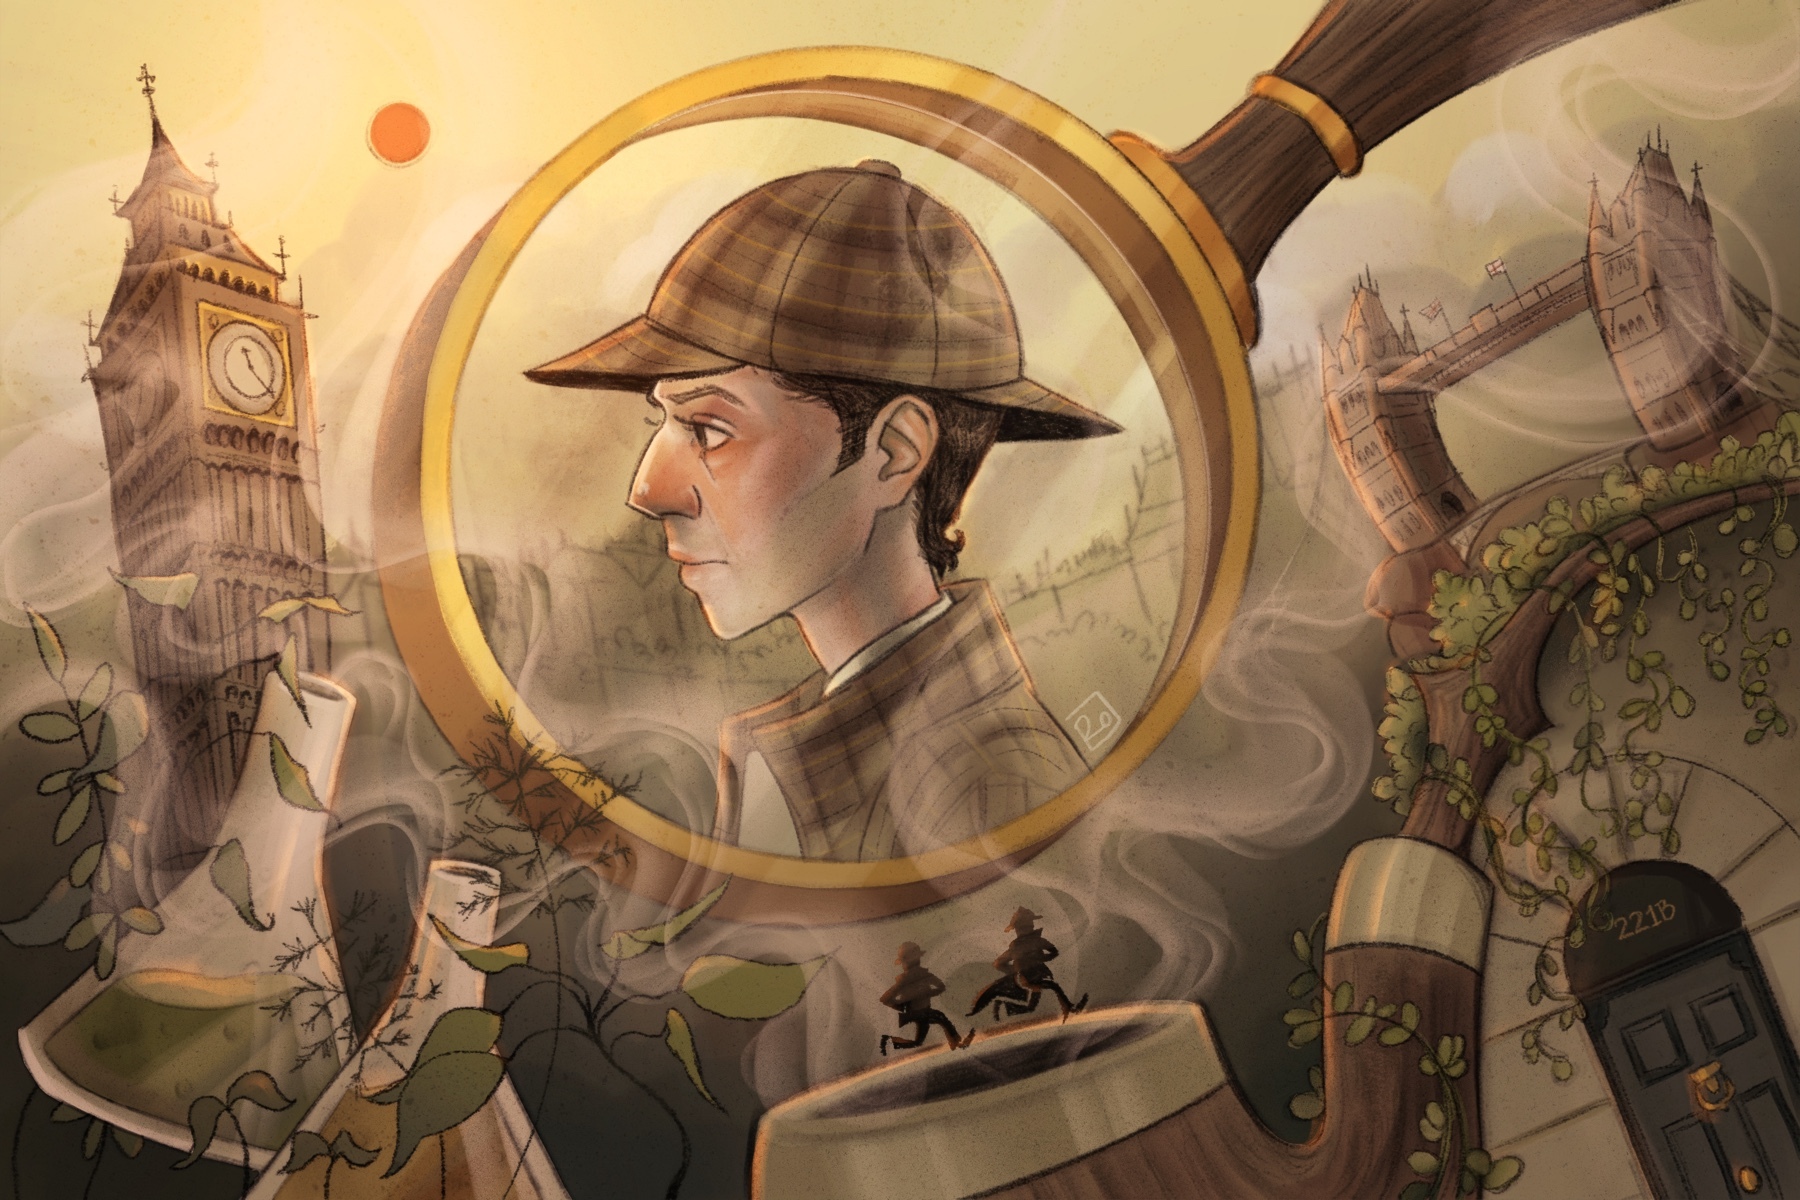 An illustration of Sherlock Holmes